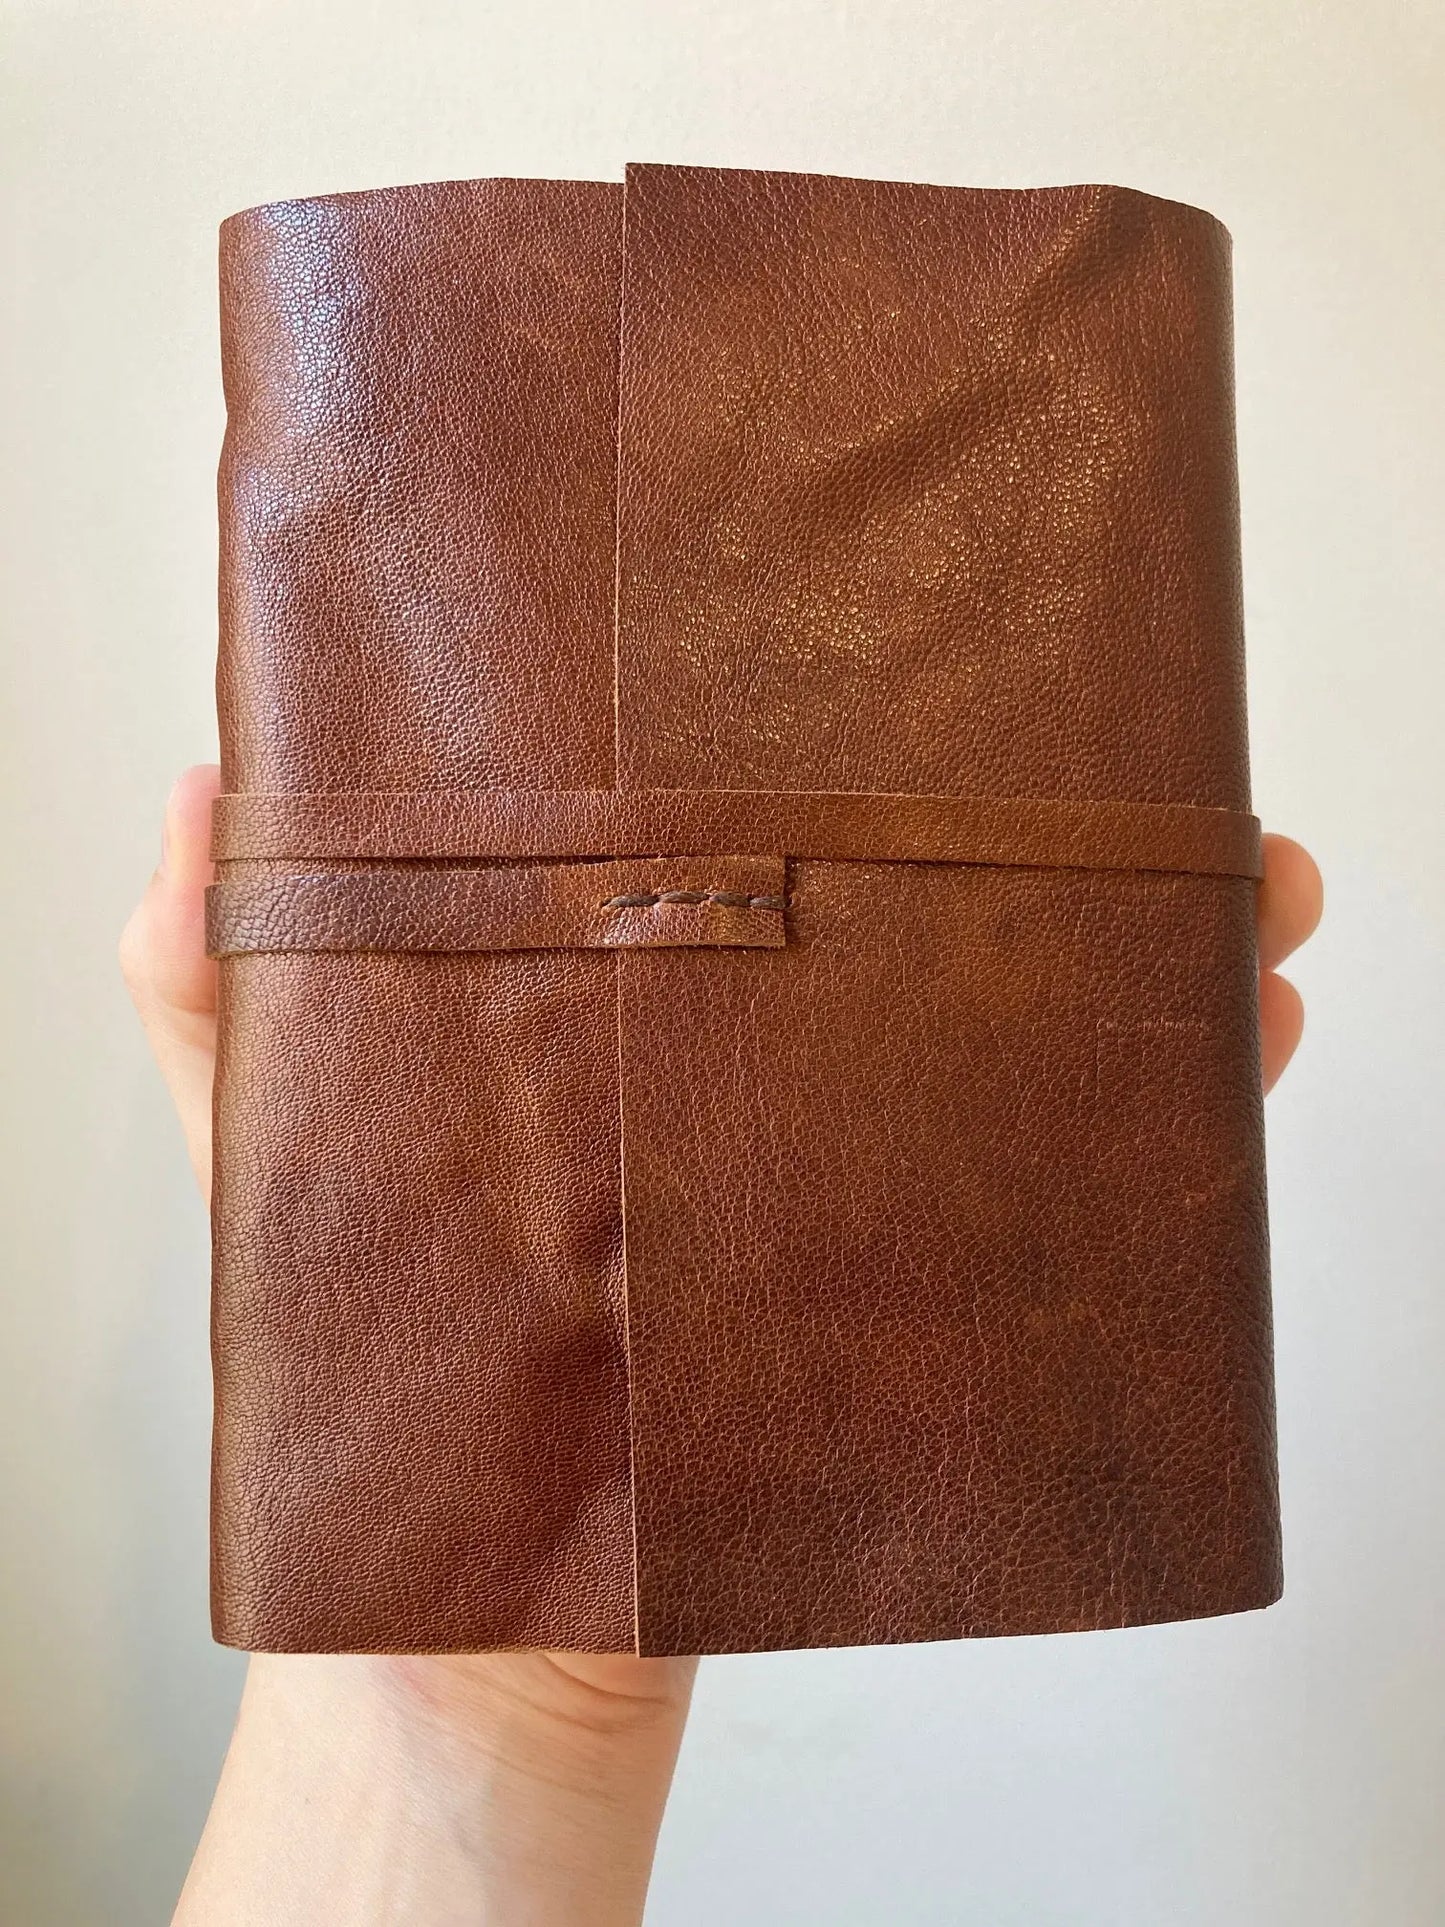 Auburn Brown Leather Journal - Diamond Binding Style Thrive Handmade Scrap Leather Journals Handmade in Philadelphia